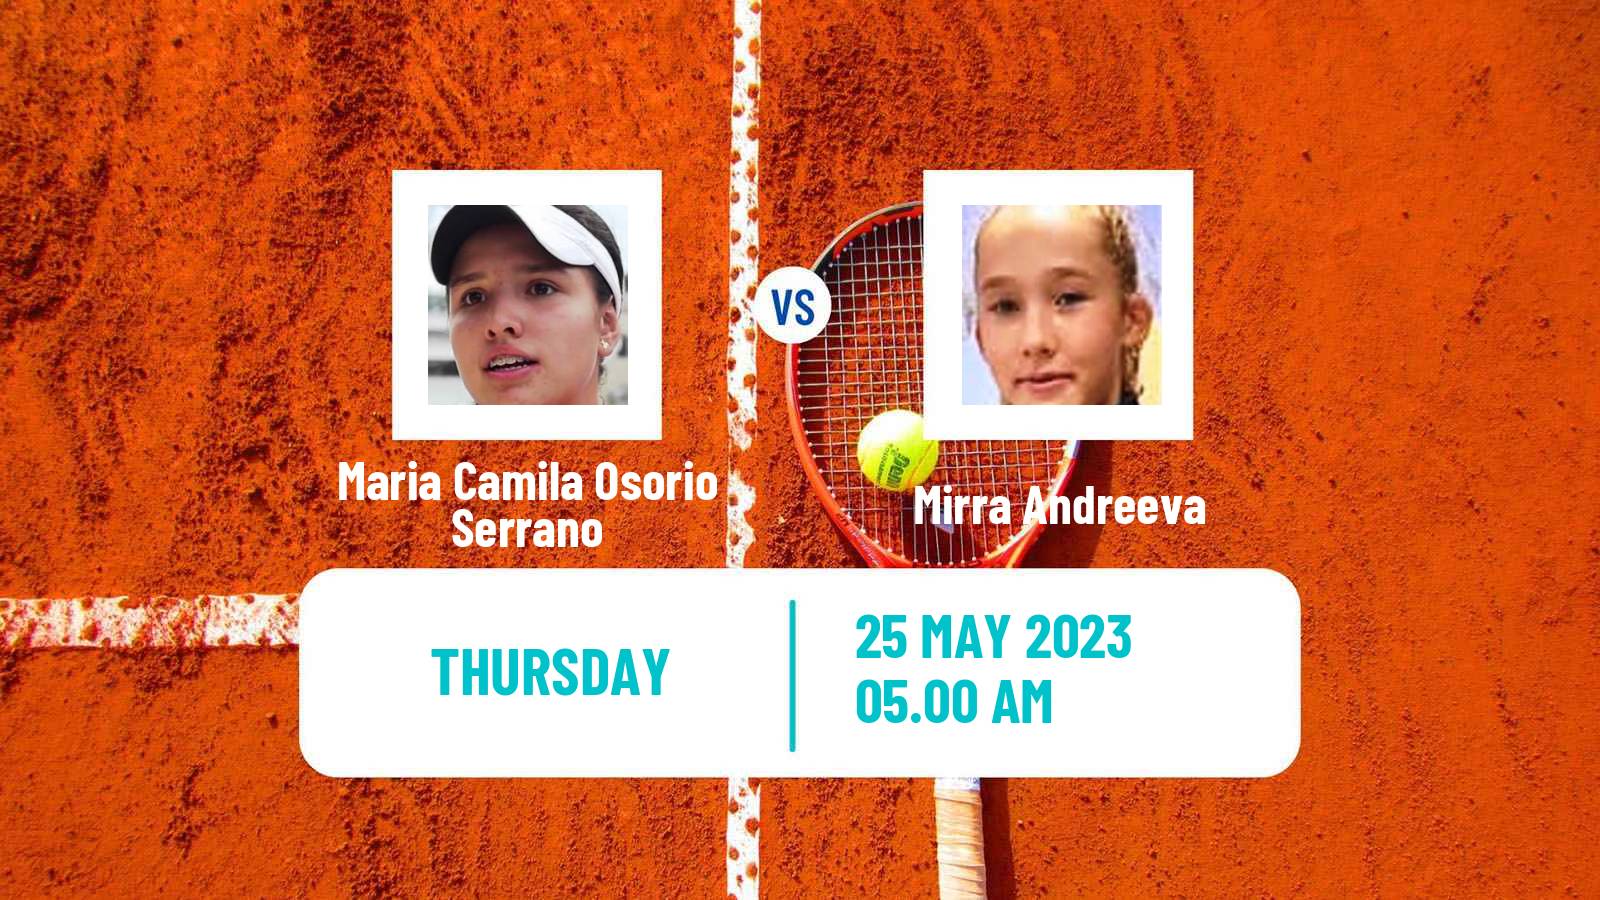 Tennis WTA Roland Garros Maria Camila Osorio Serrano - Mirra Andreeva